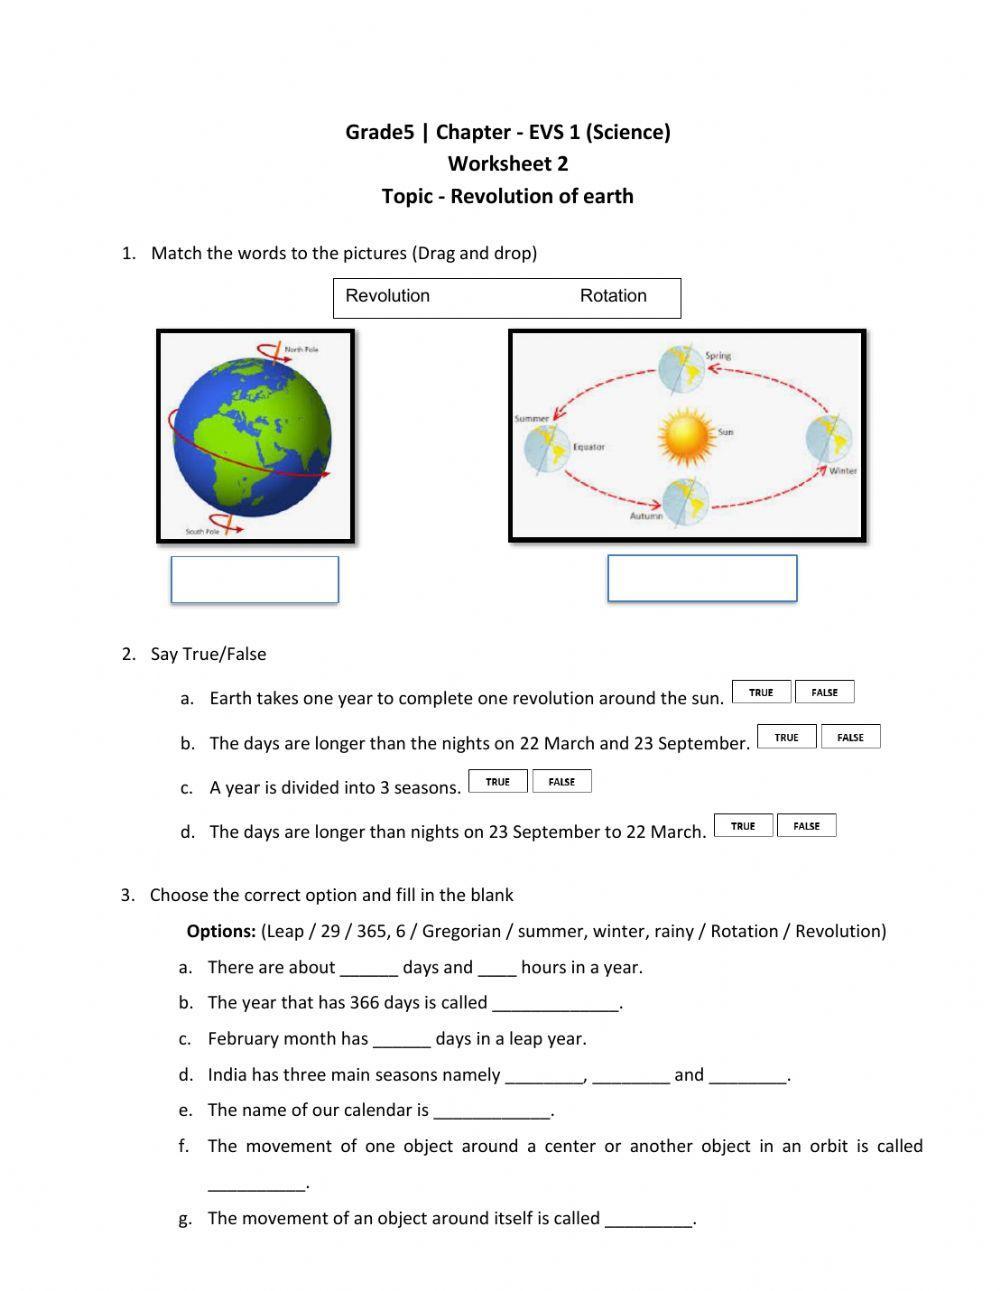 Grade 5: Worksheet 2 - Revolution of Earth